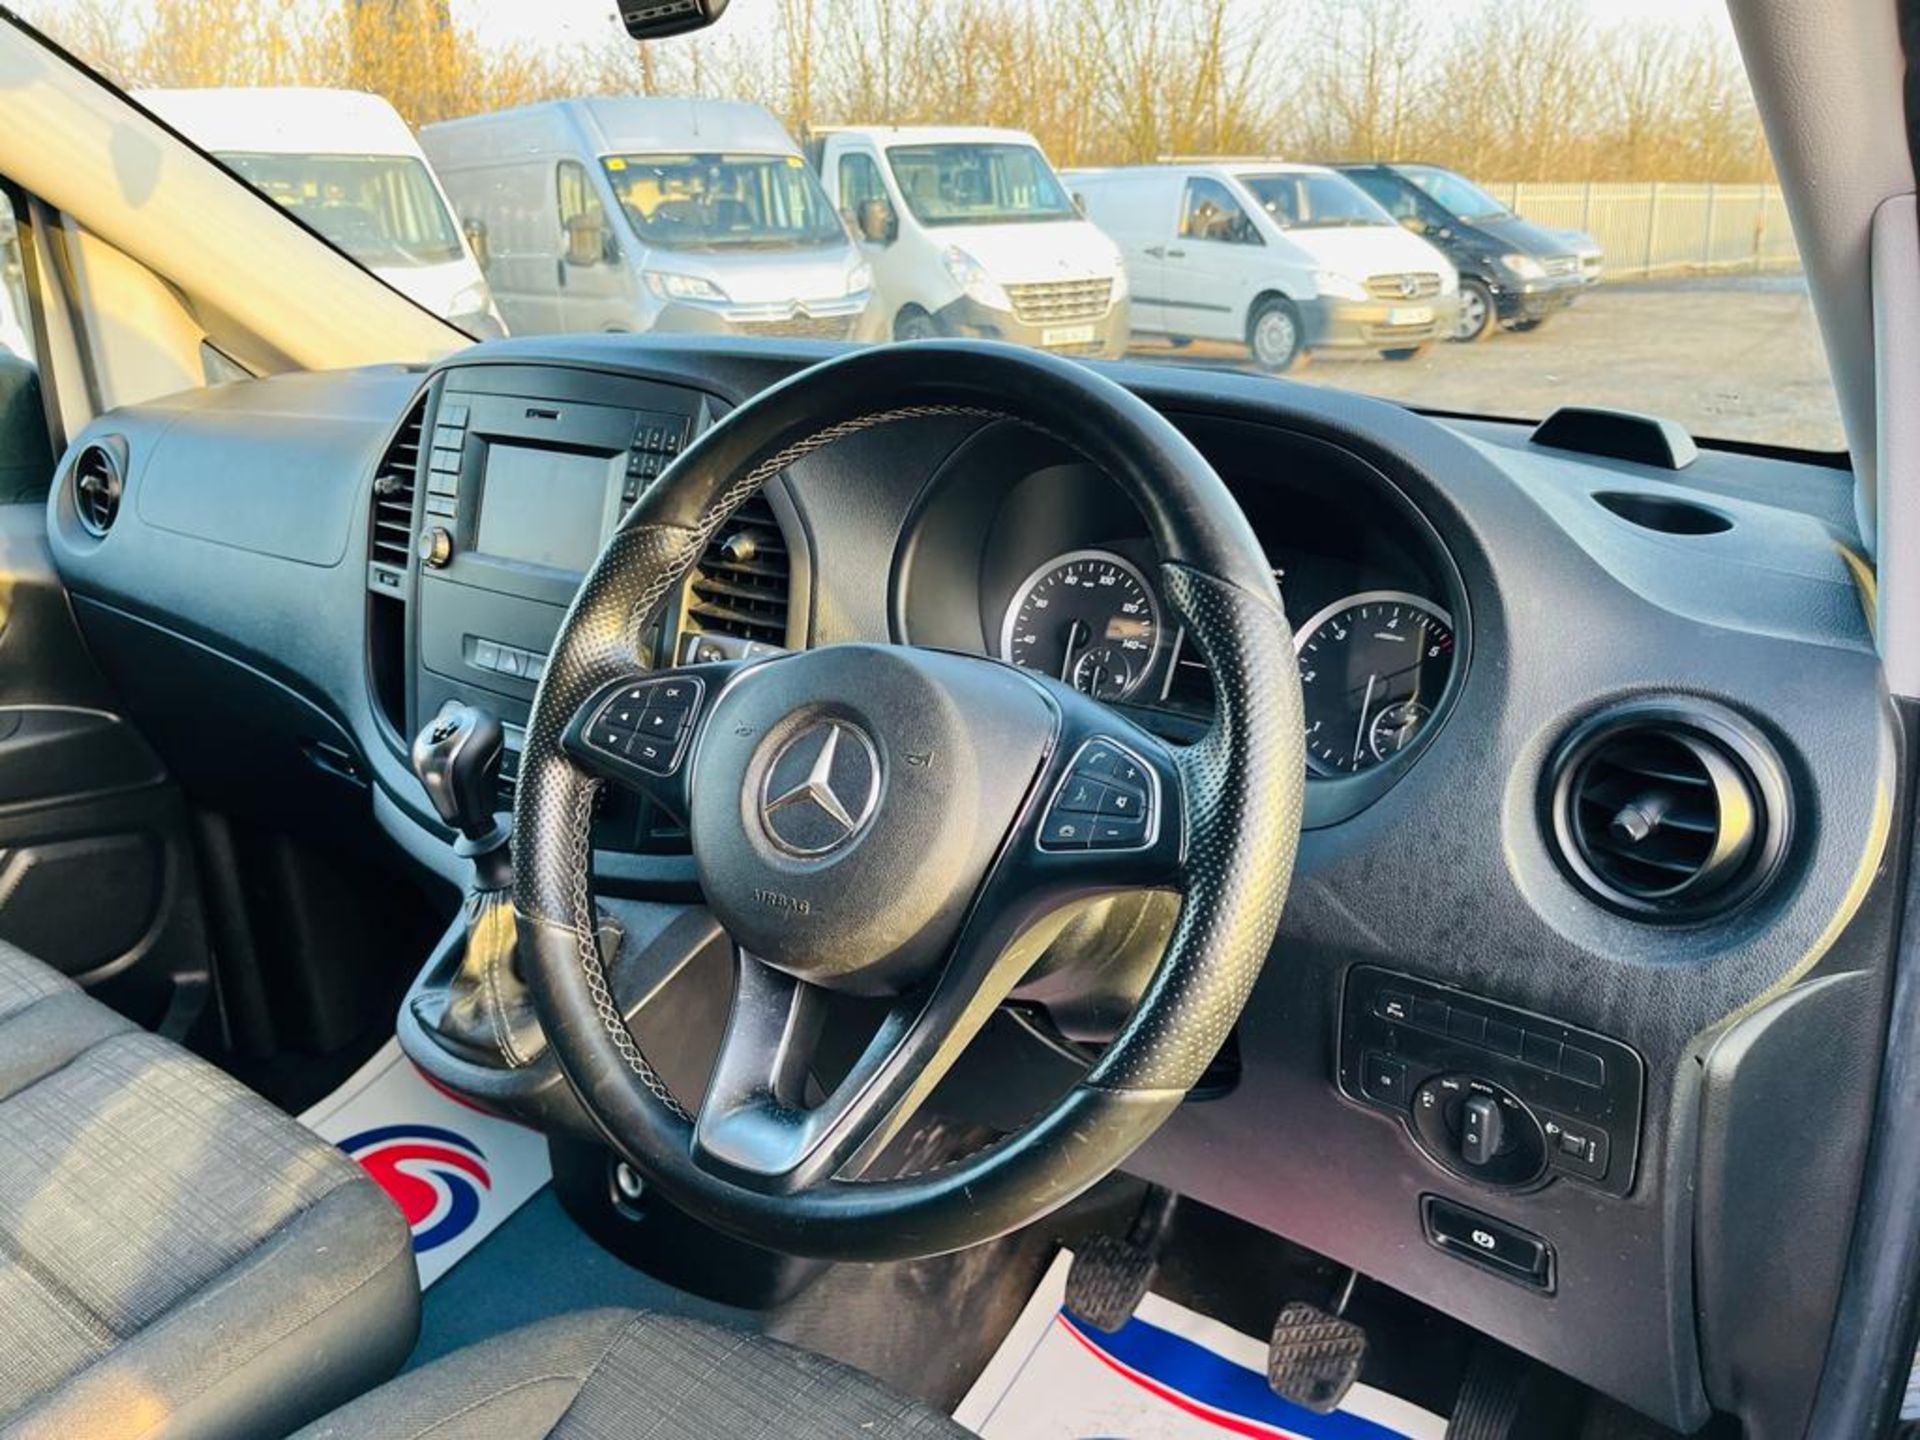 Mercedes Benz Vito 2.1 114 CDI Bluetec LWB 2019 '69 Reg'- Sat Nav- ULEZ Compliant - Fridge / Freezer - Image 17 of 25